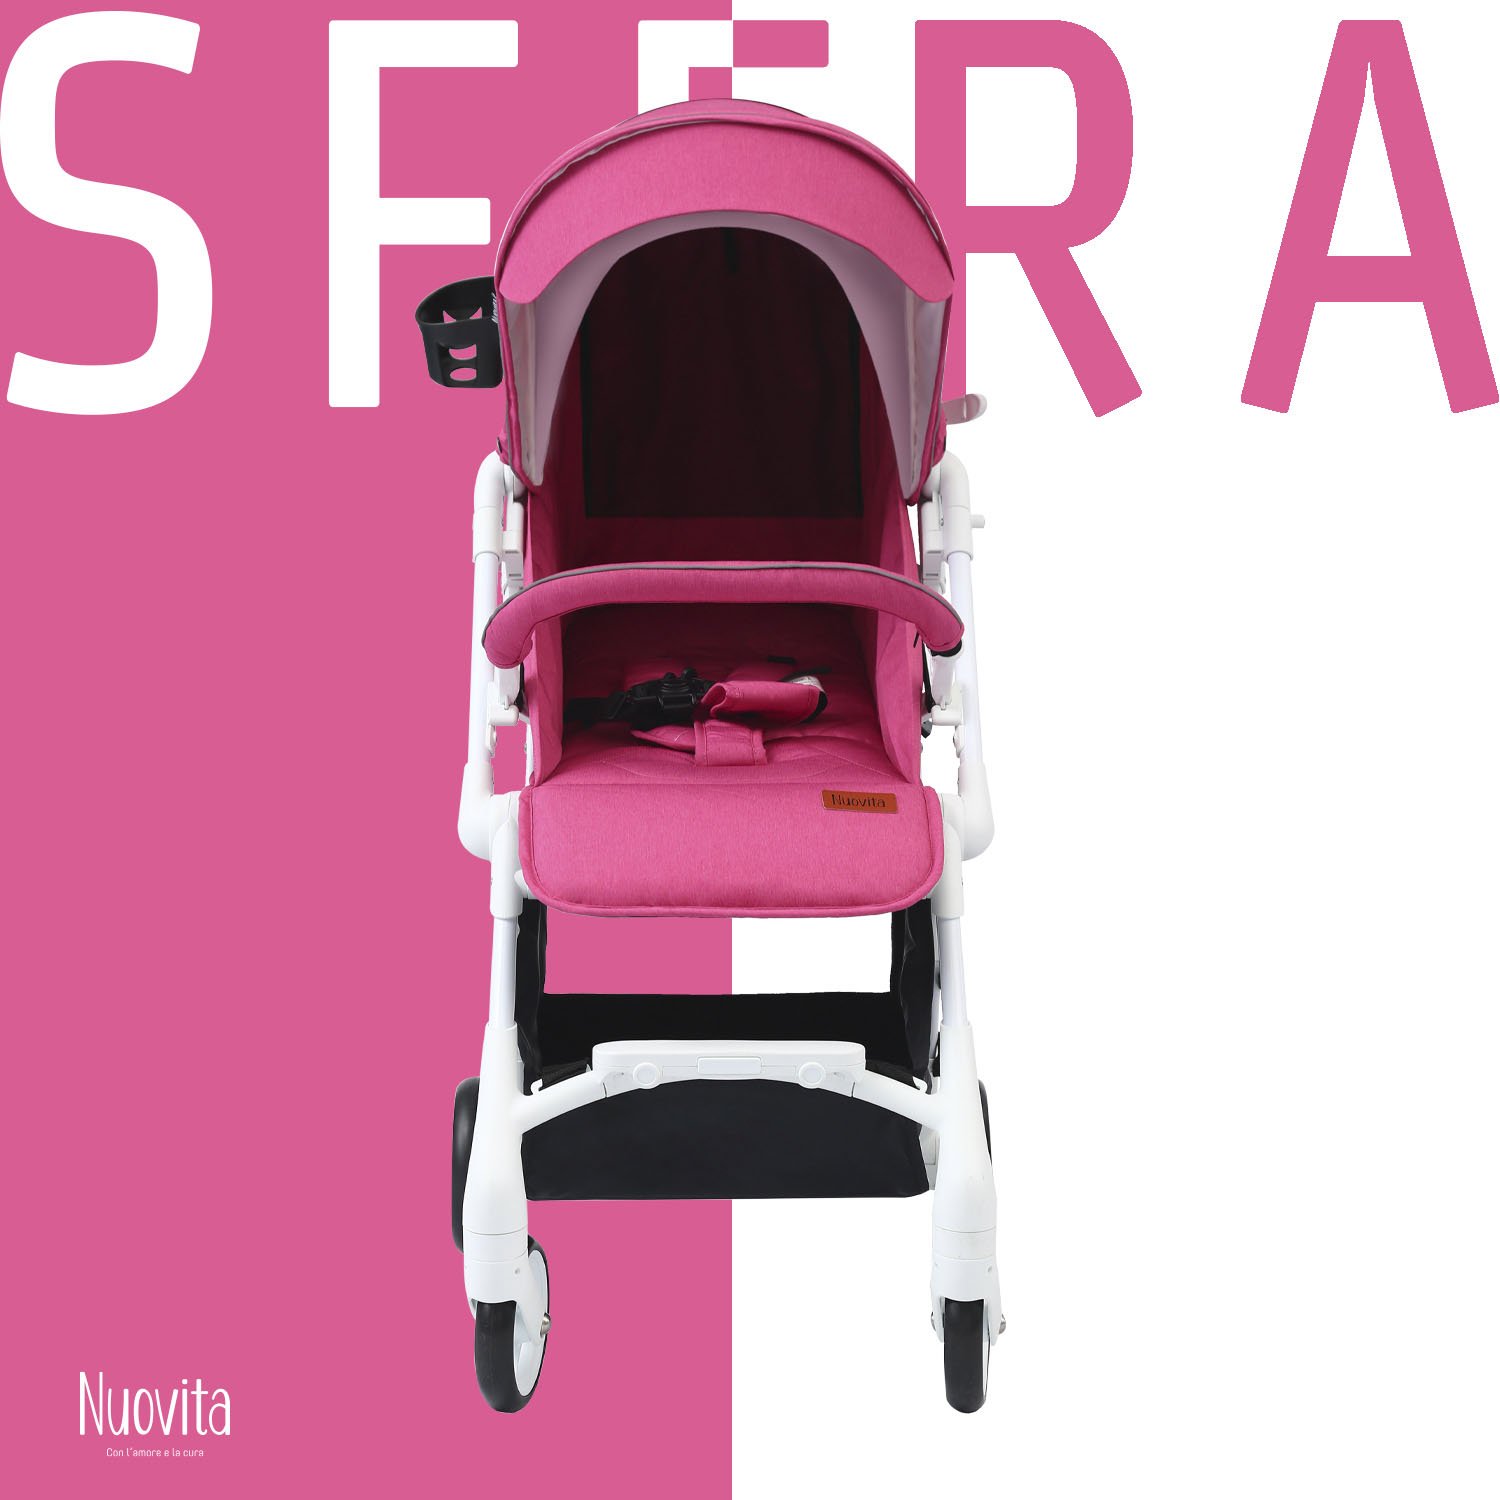 Прогулочная коляска Nuovita Sfera Rosa, Bianco, розовый, белый прогулочная коляска nuovita sfera